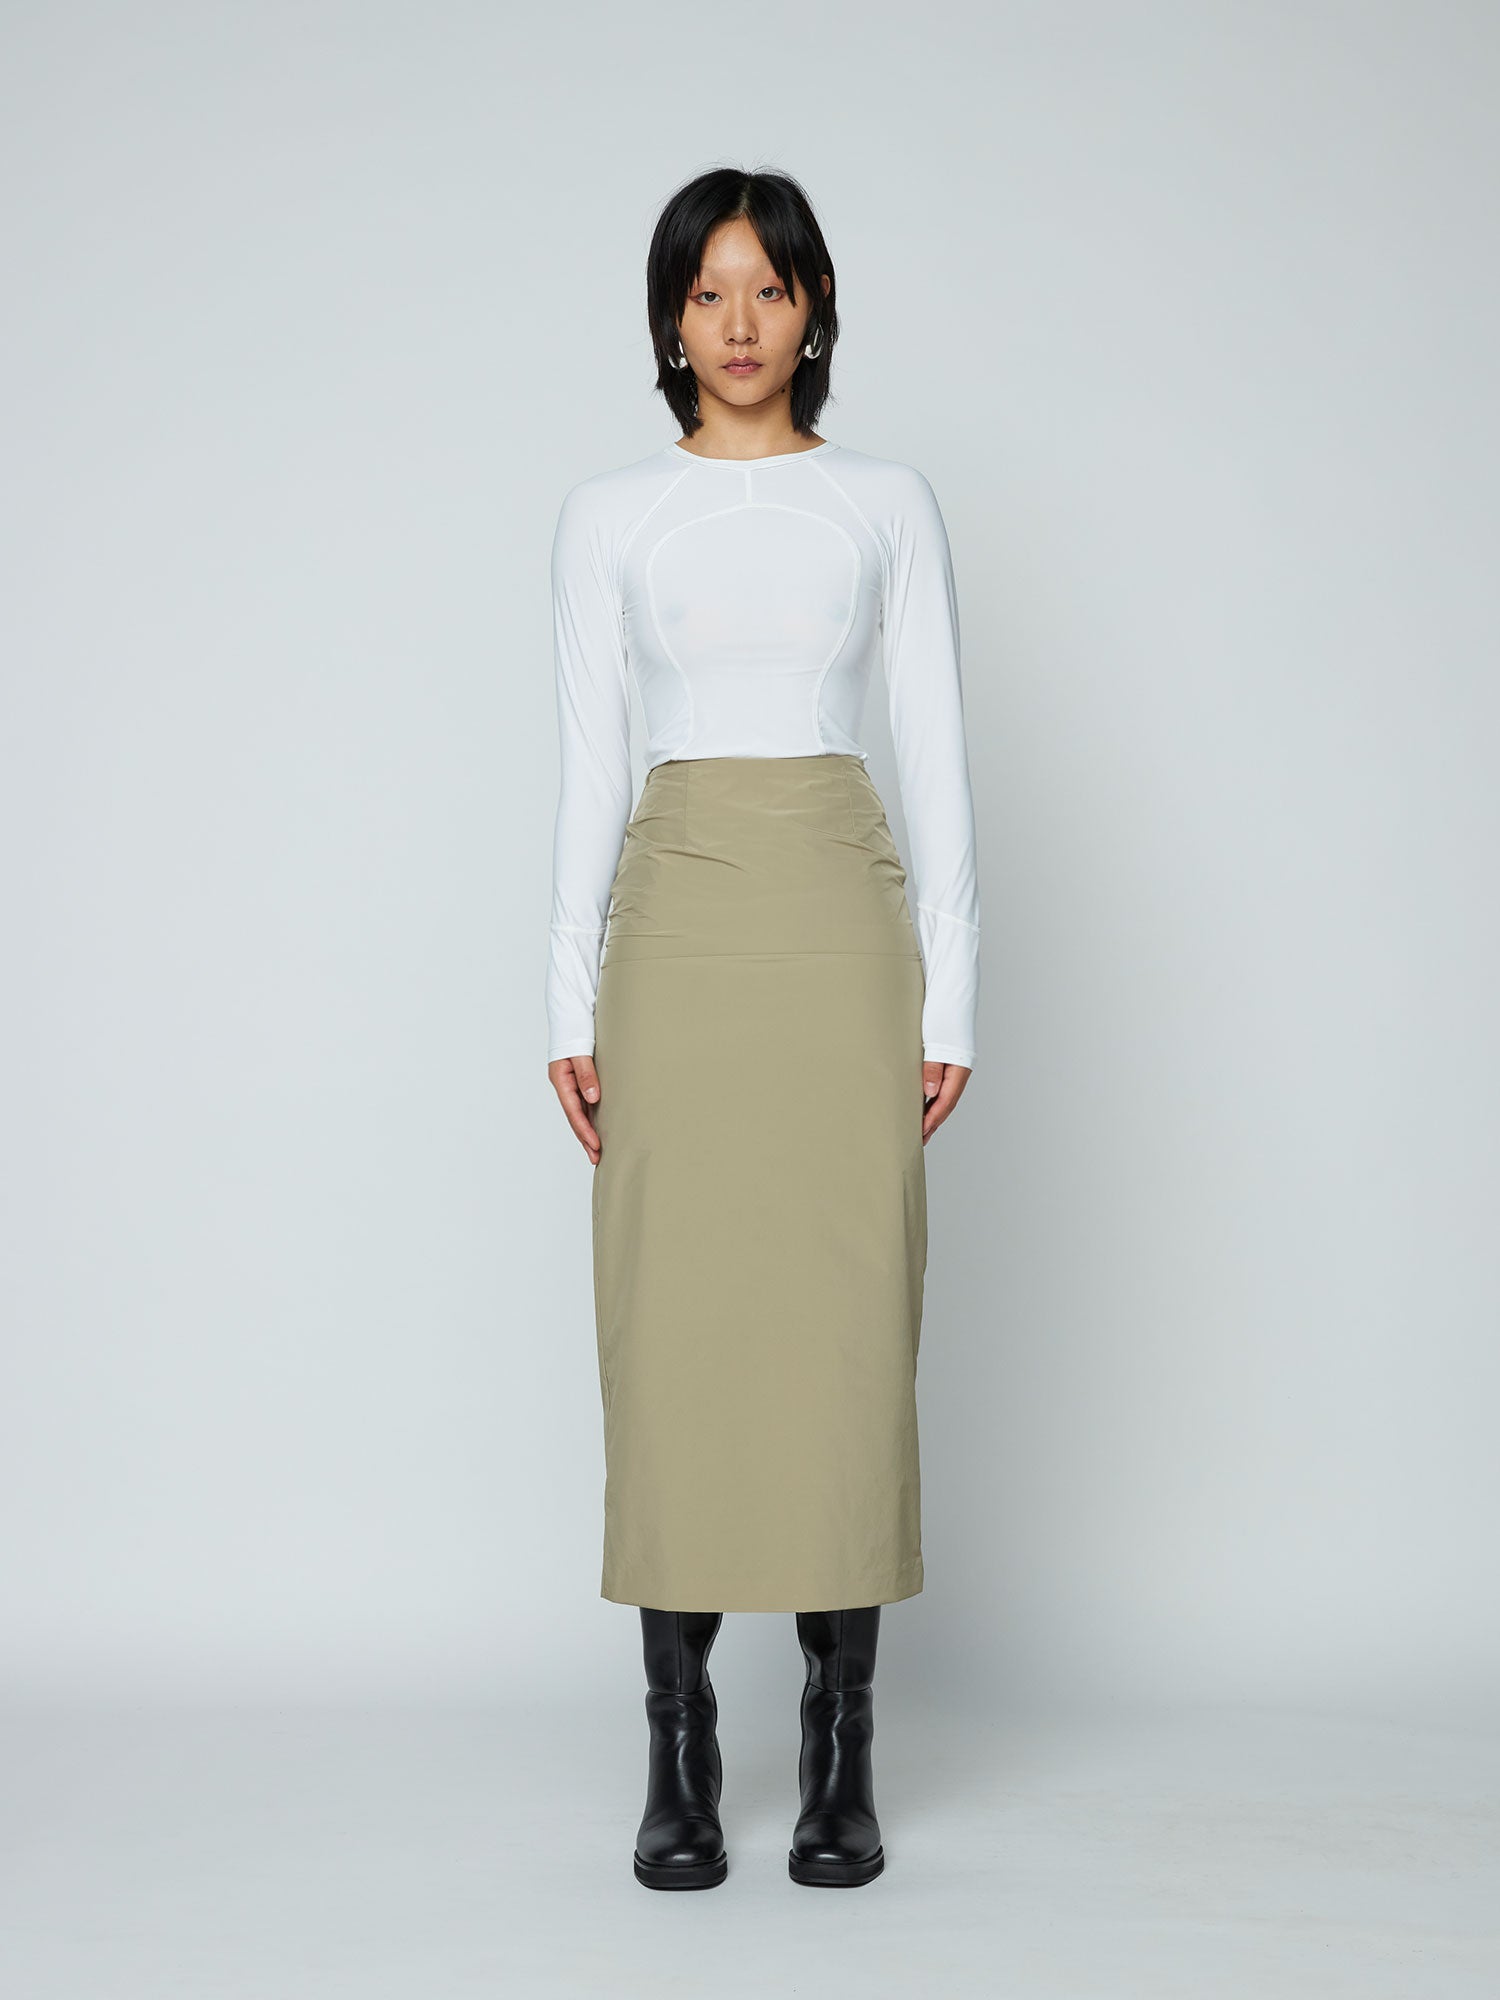 Wynn Hamlyn Sophia Maxi Skirt in Cactus Green available at The New Trend Australia.